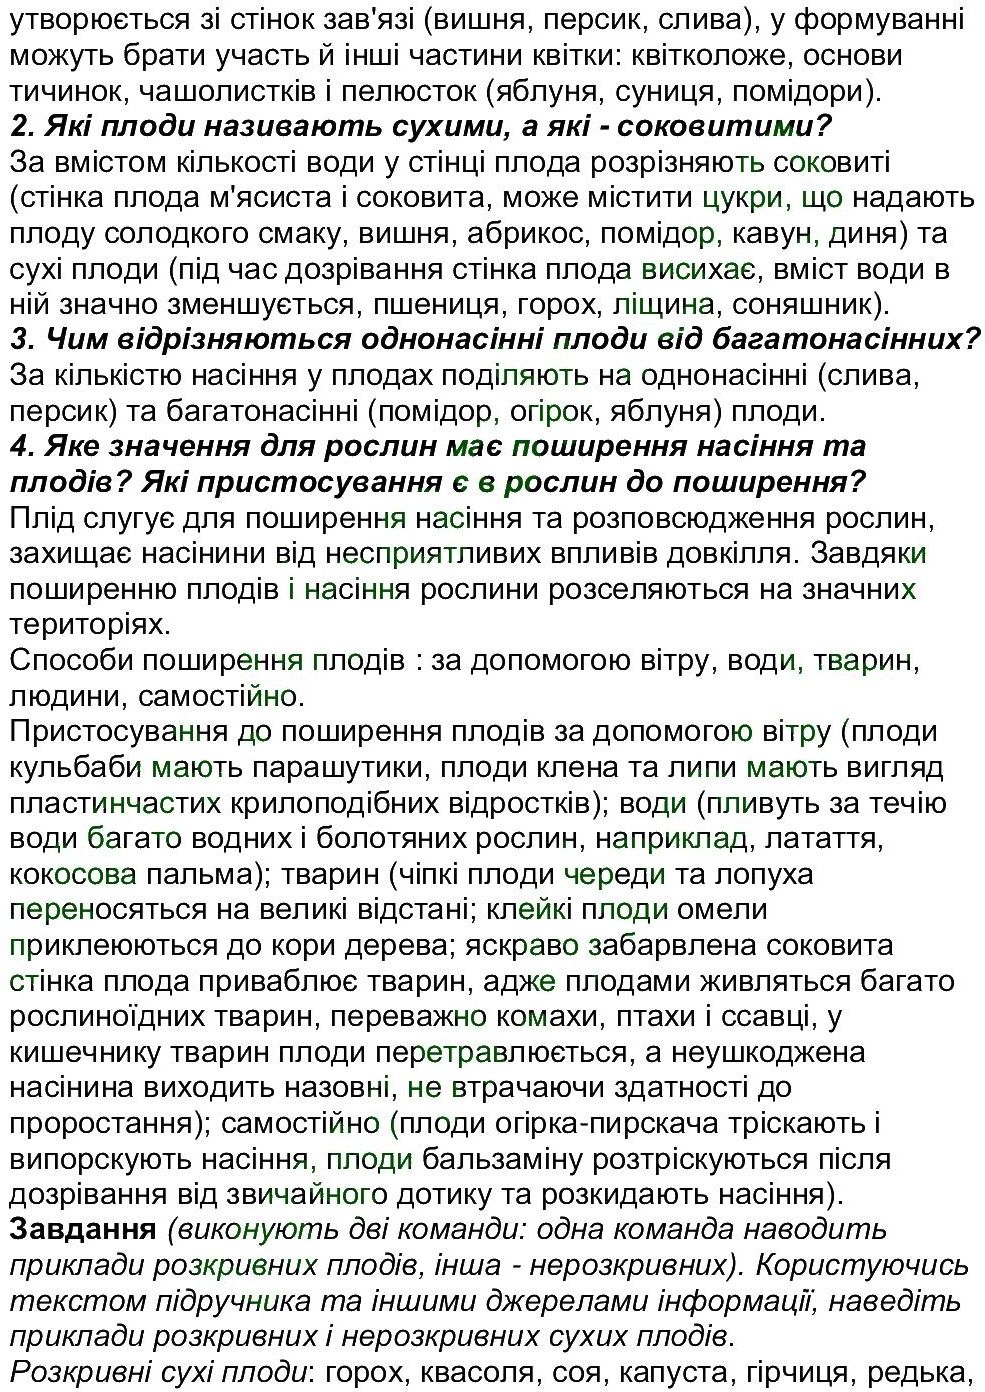 6-biologiya-li-ostapchenko-pg-balan-nyu-matyash-2016--tema-3-roslini-ст140-144-rnd5736.jpg